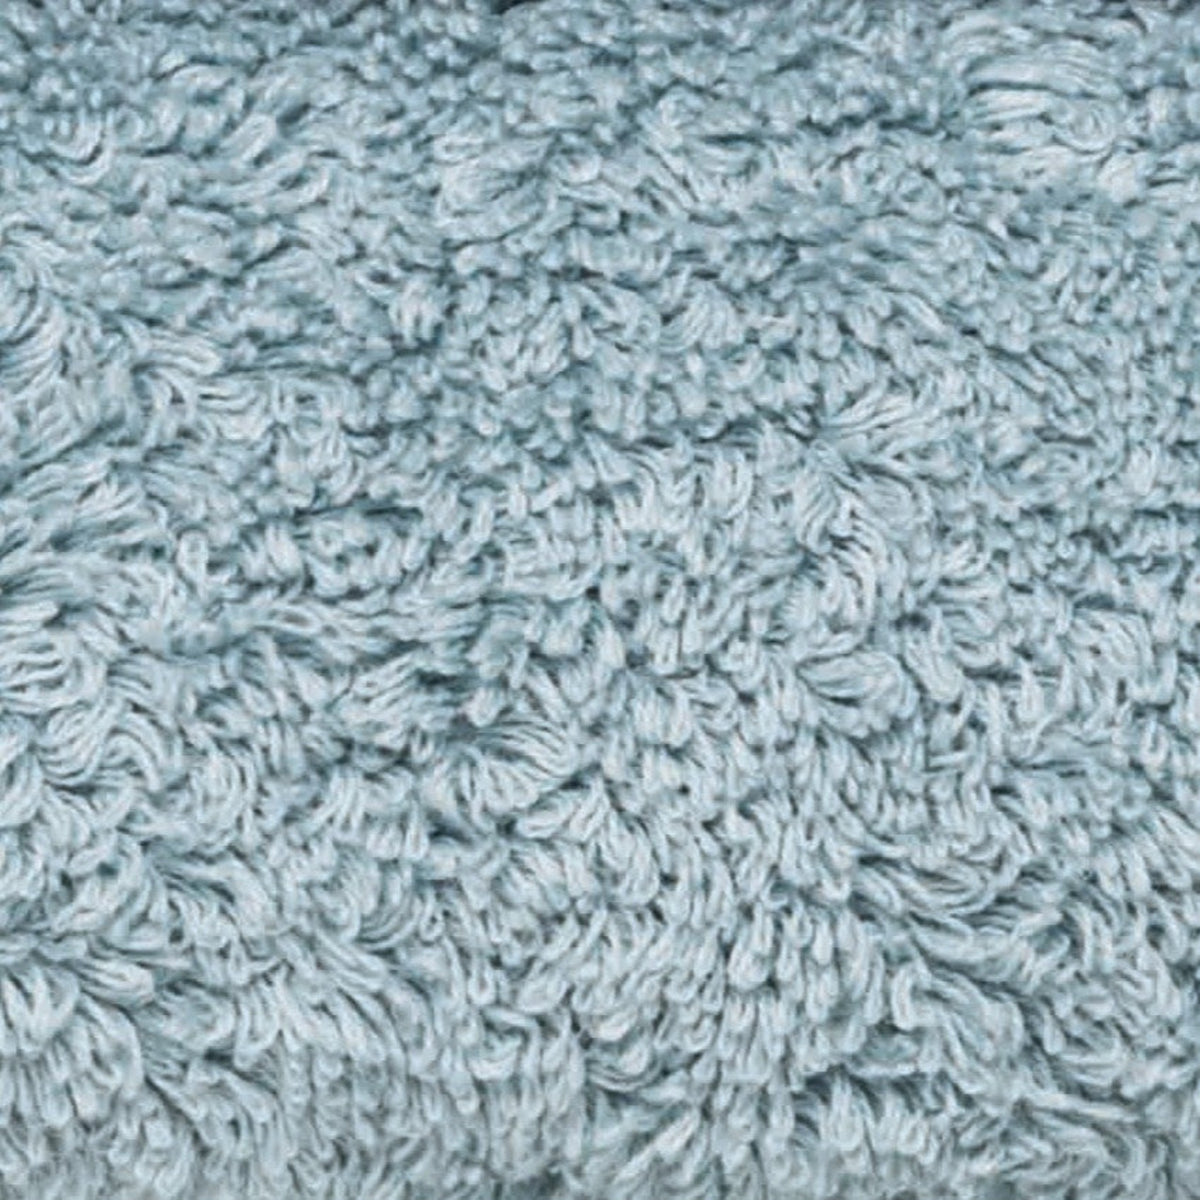 Swatch Sample Image of Graccioza Evora Towels Sea Mist Color